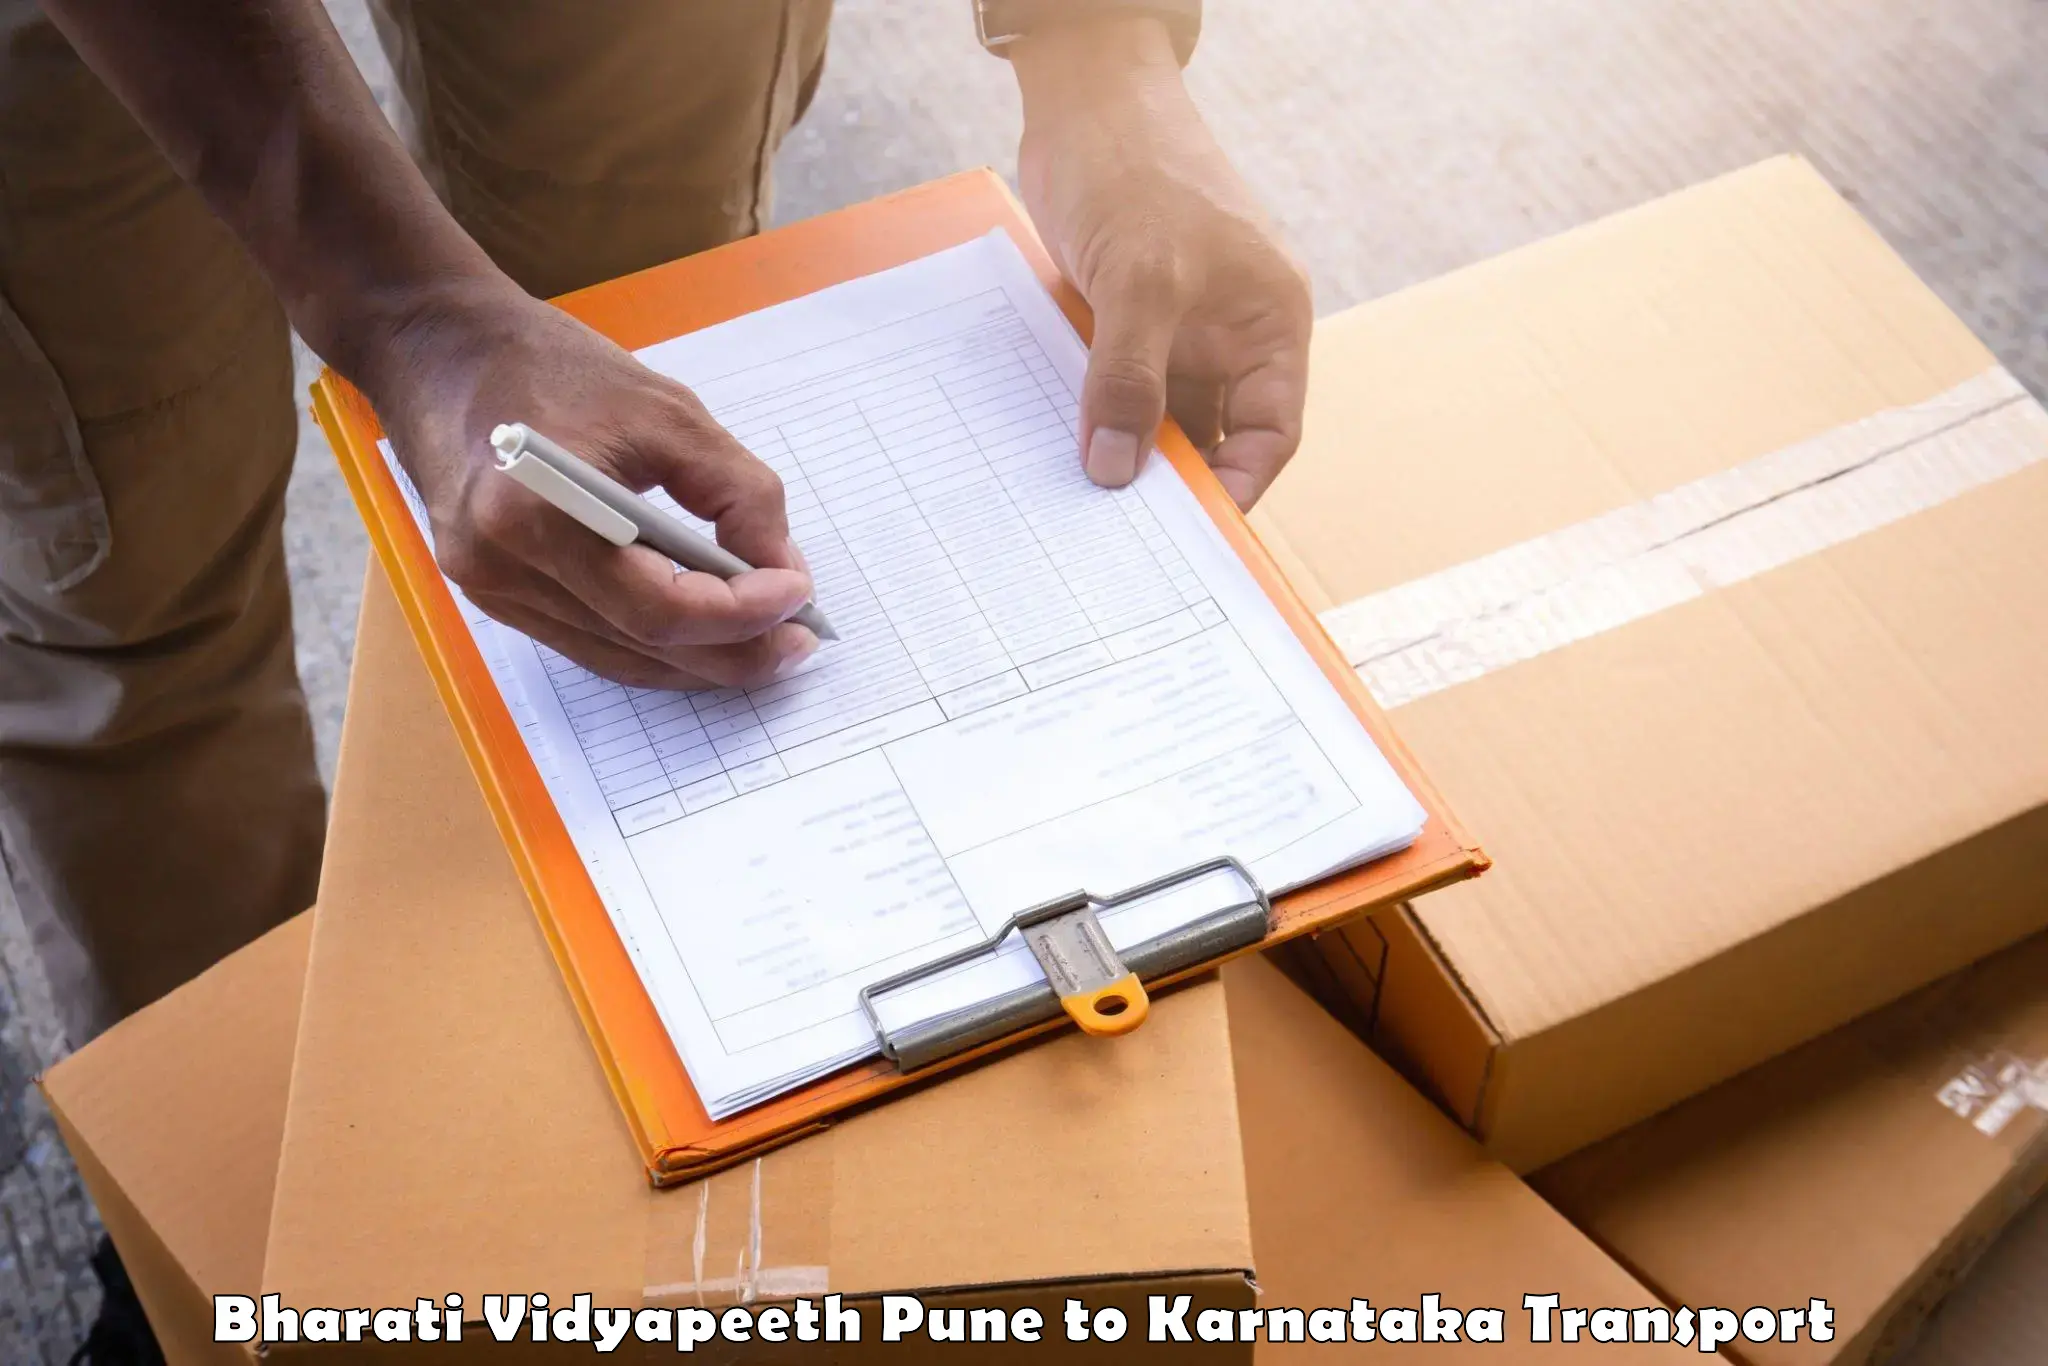 Container transport service Bharati Vidyapeeth Pune to Mundgod